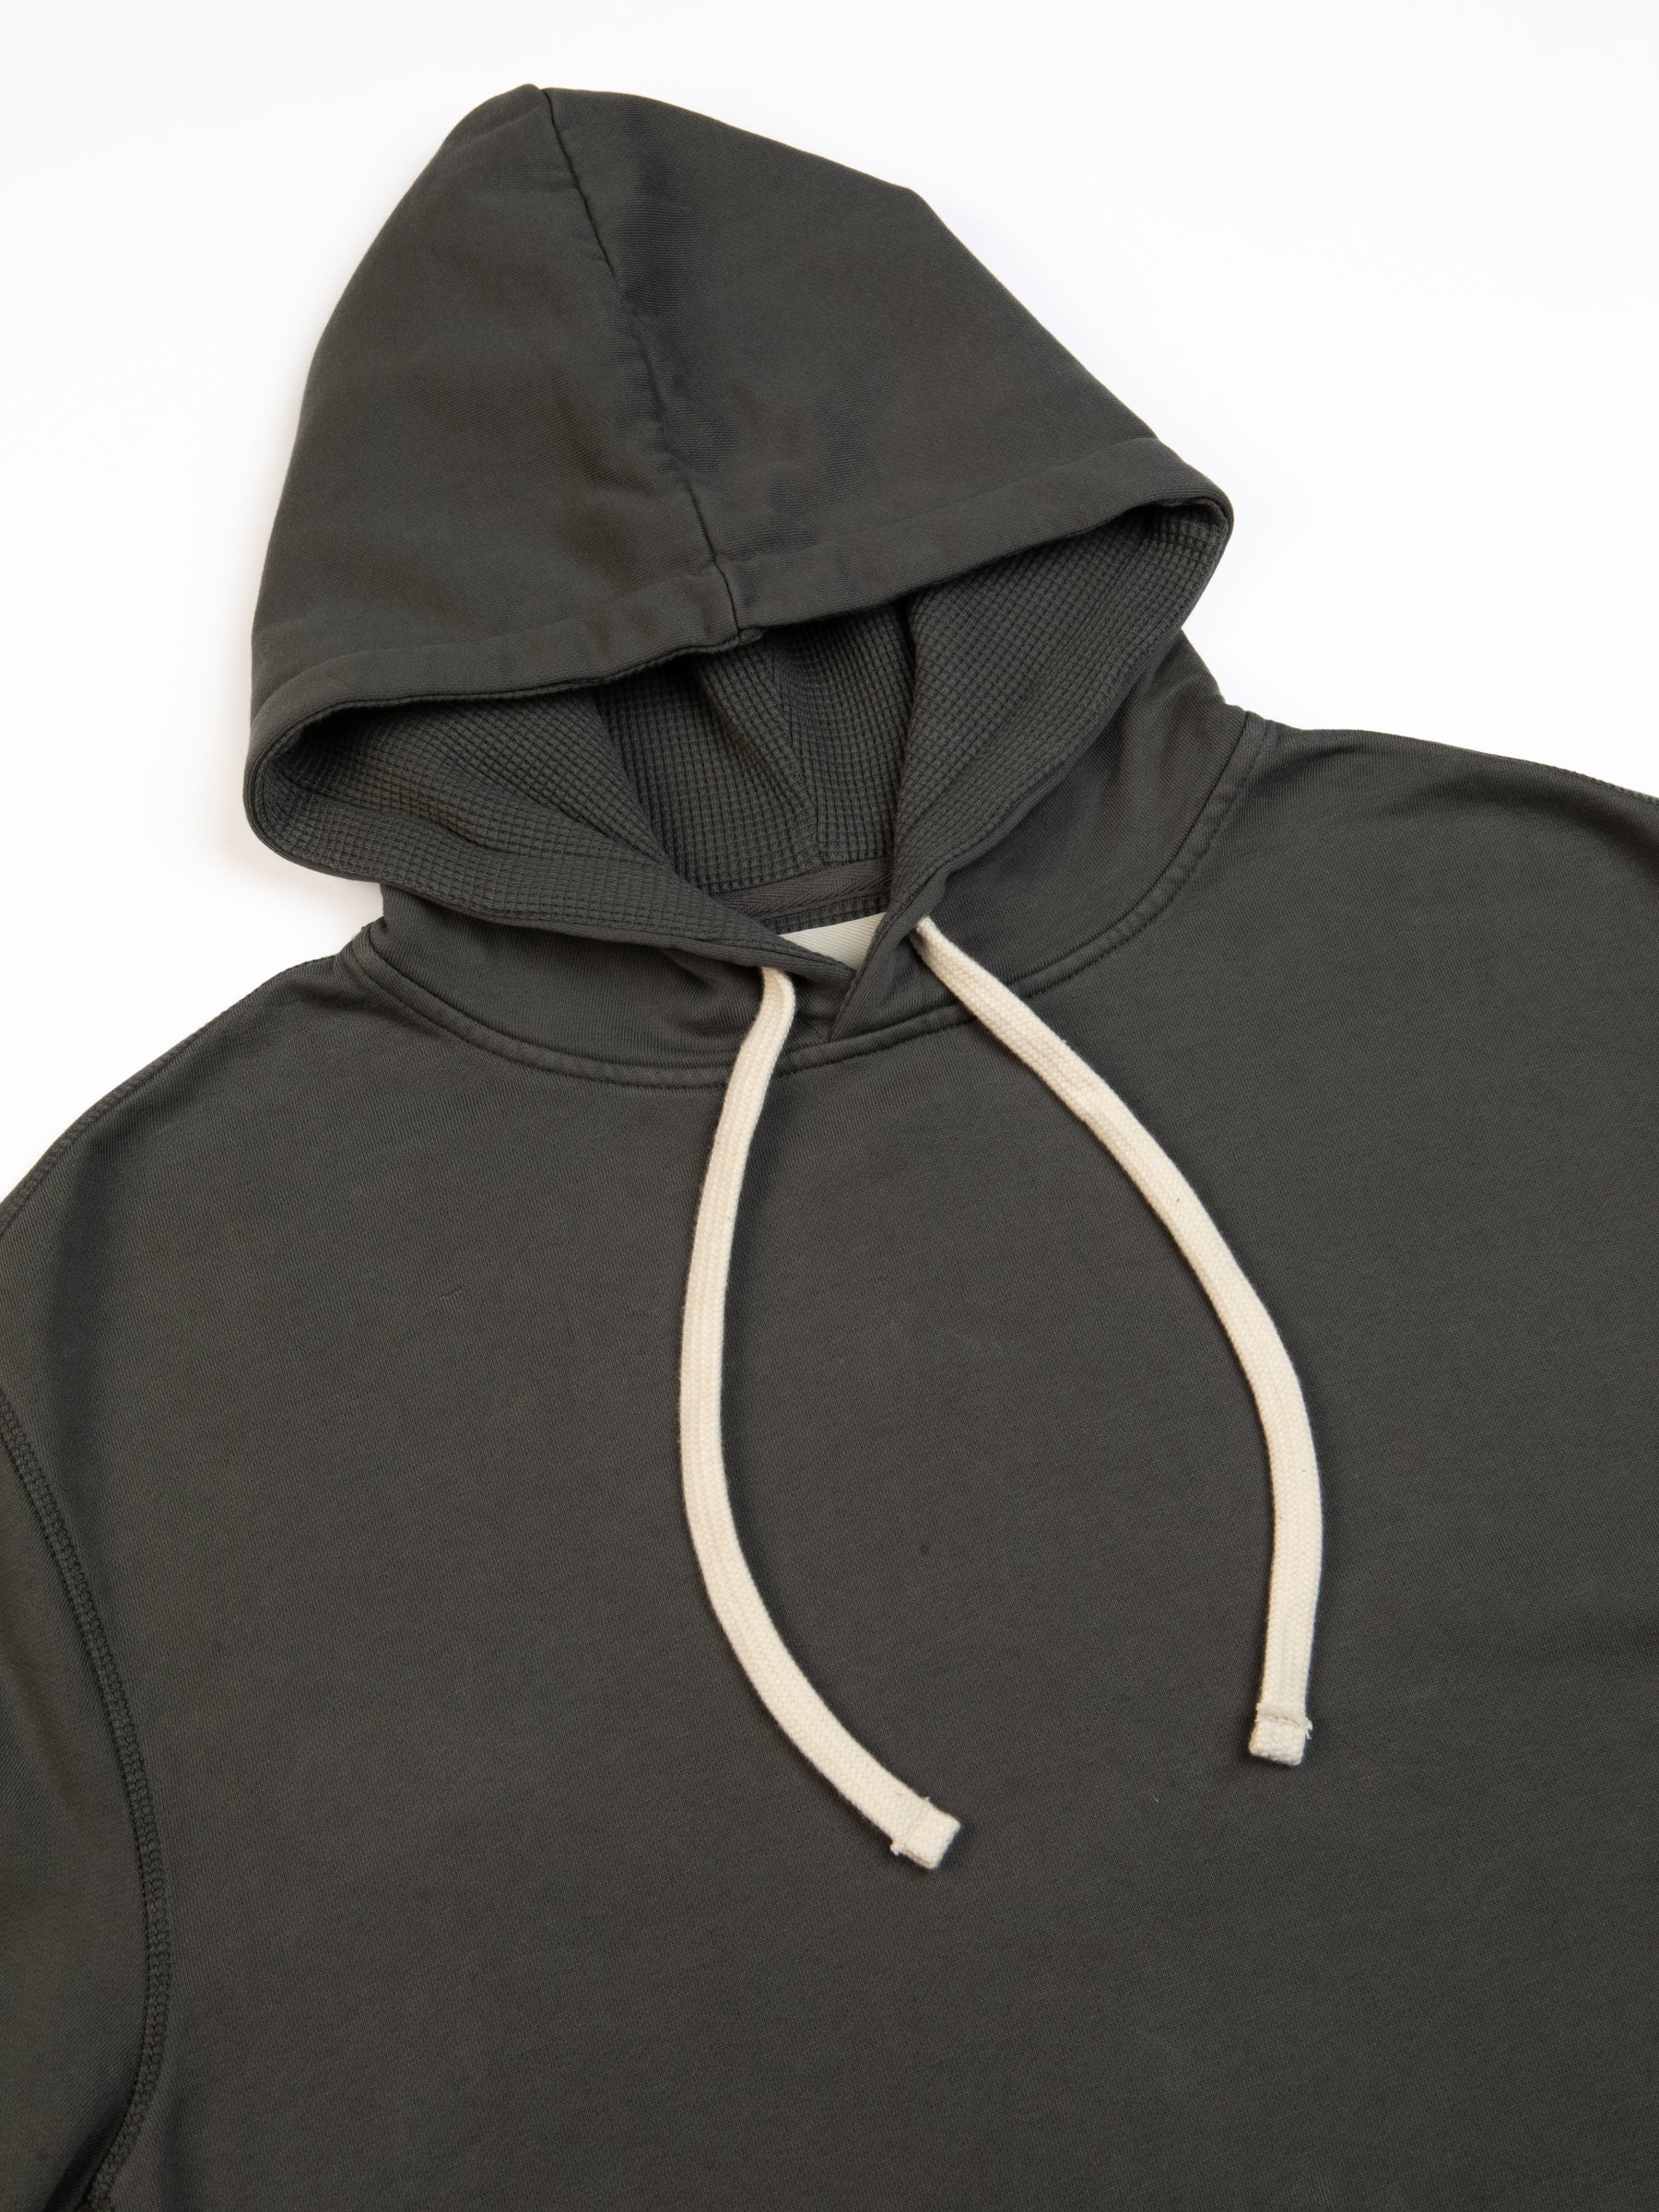 The drawstring hood of the St Andrews Hoodie by Scottish menswear brand KESTIN.